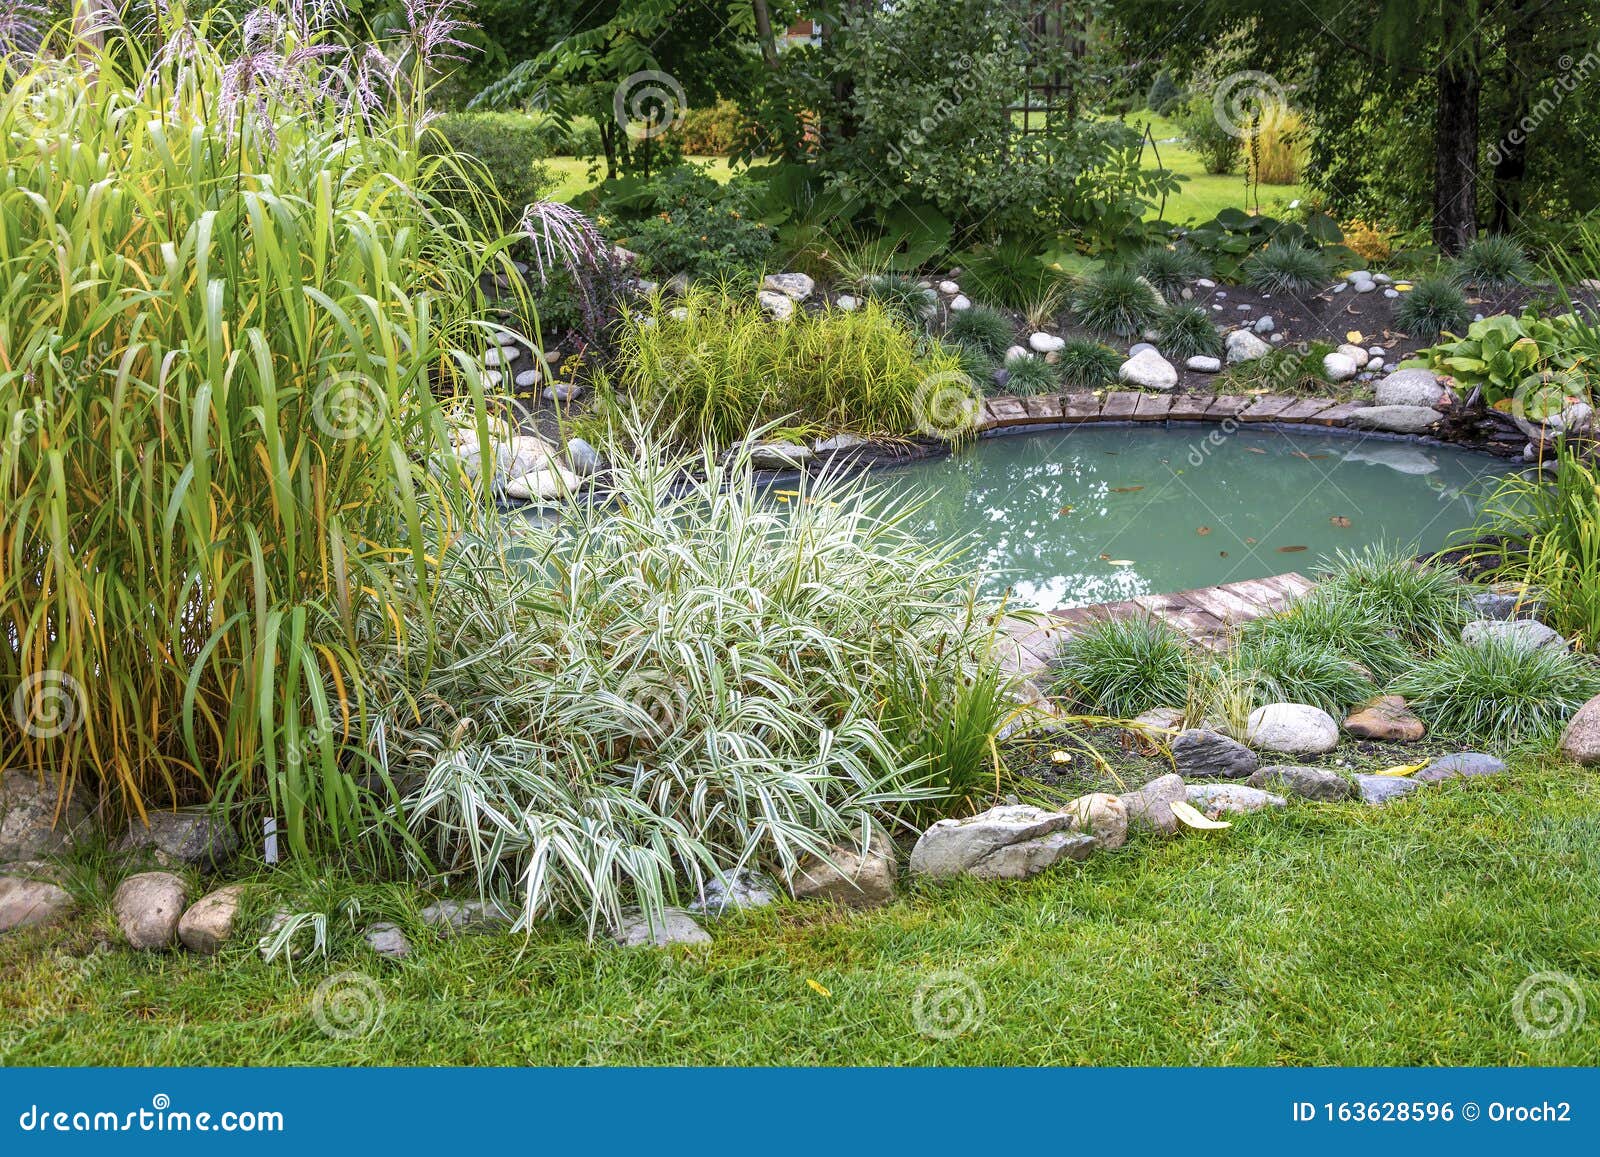 decorative beautifully arranged pond